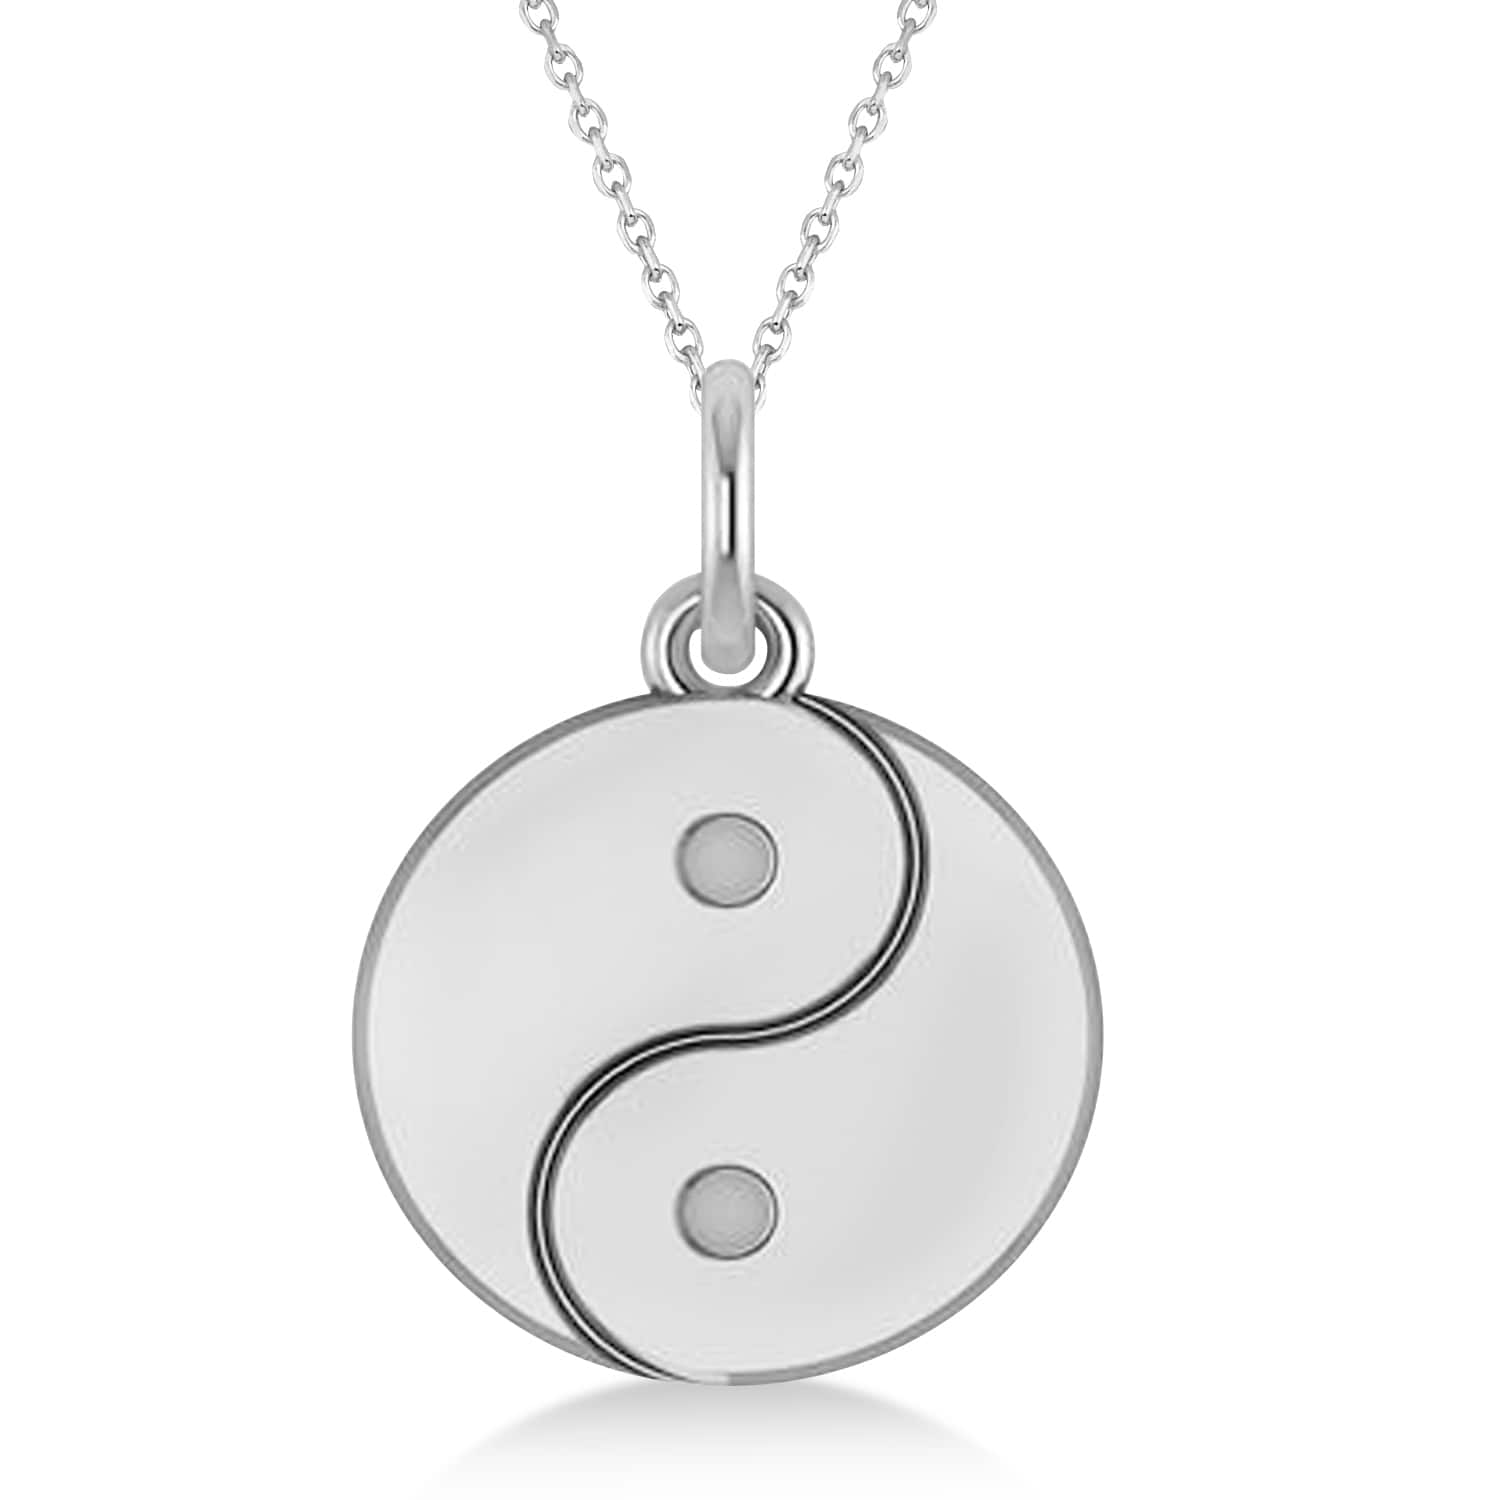 Yin Yang Symbol Pendant Necklace 14k White Gold